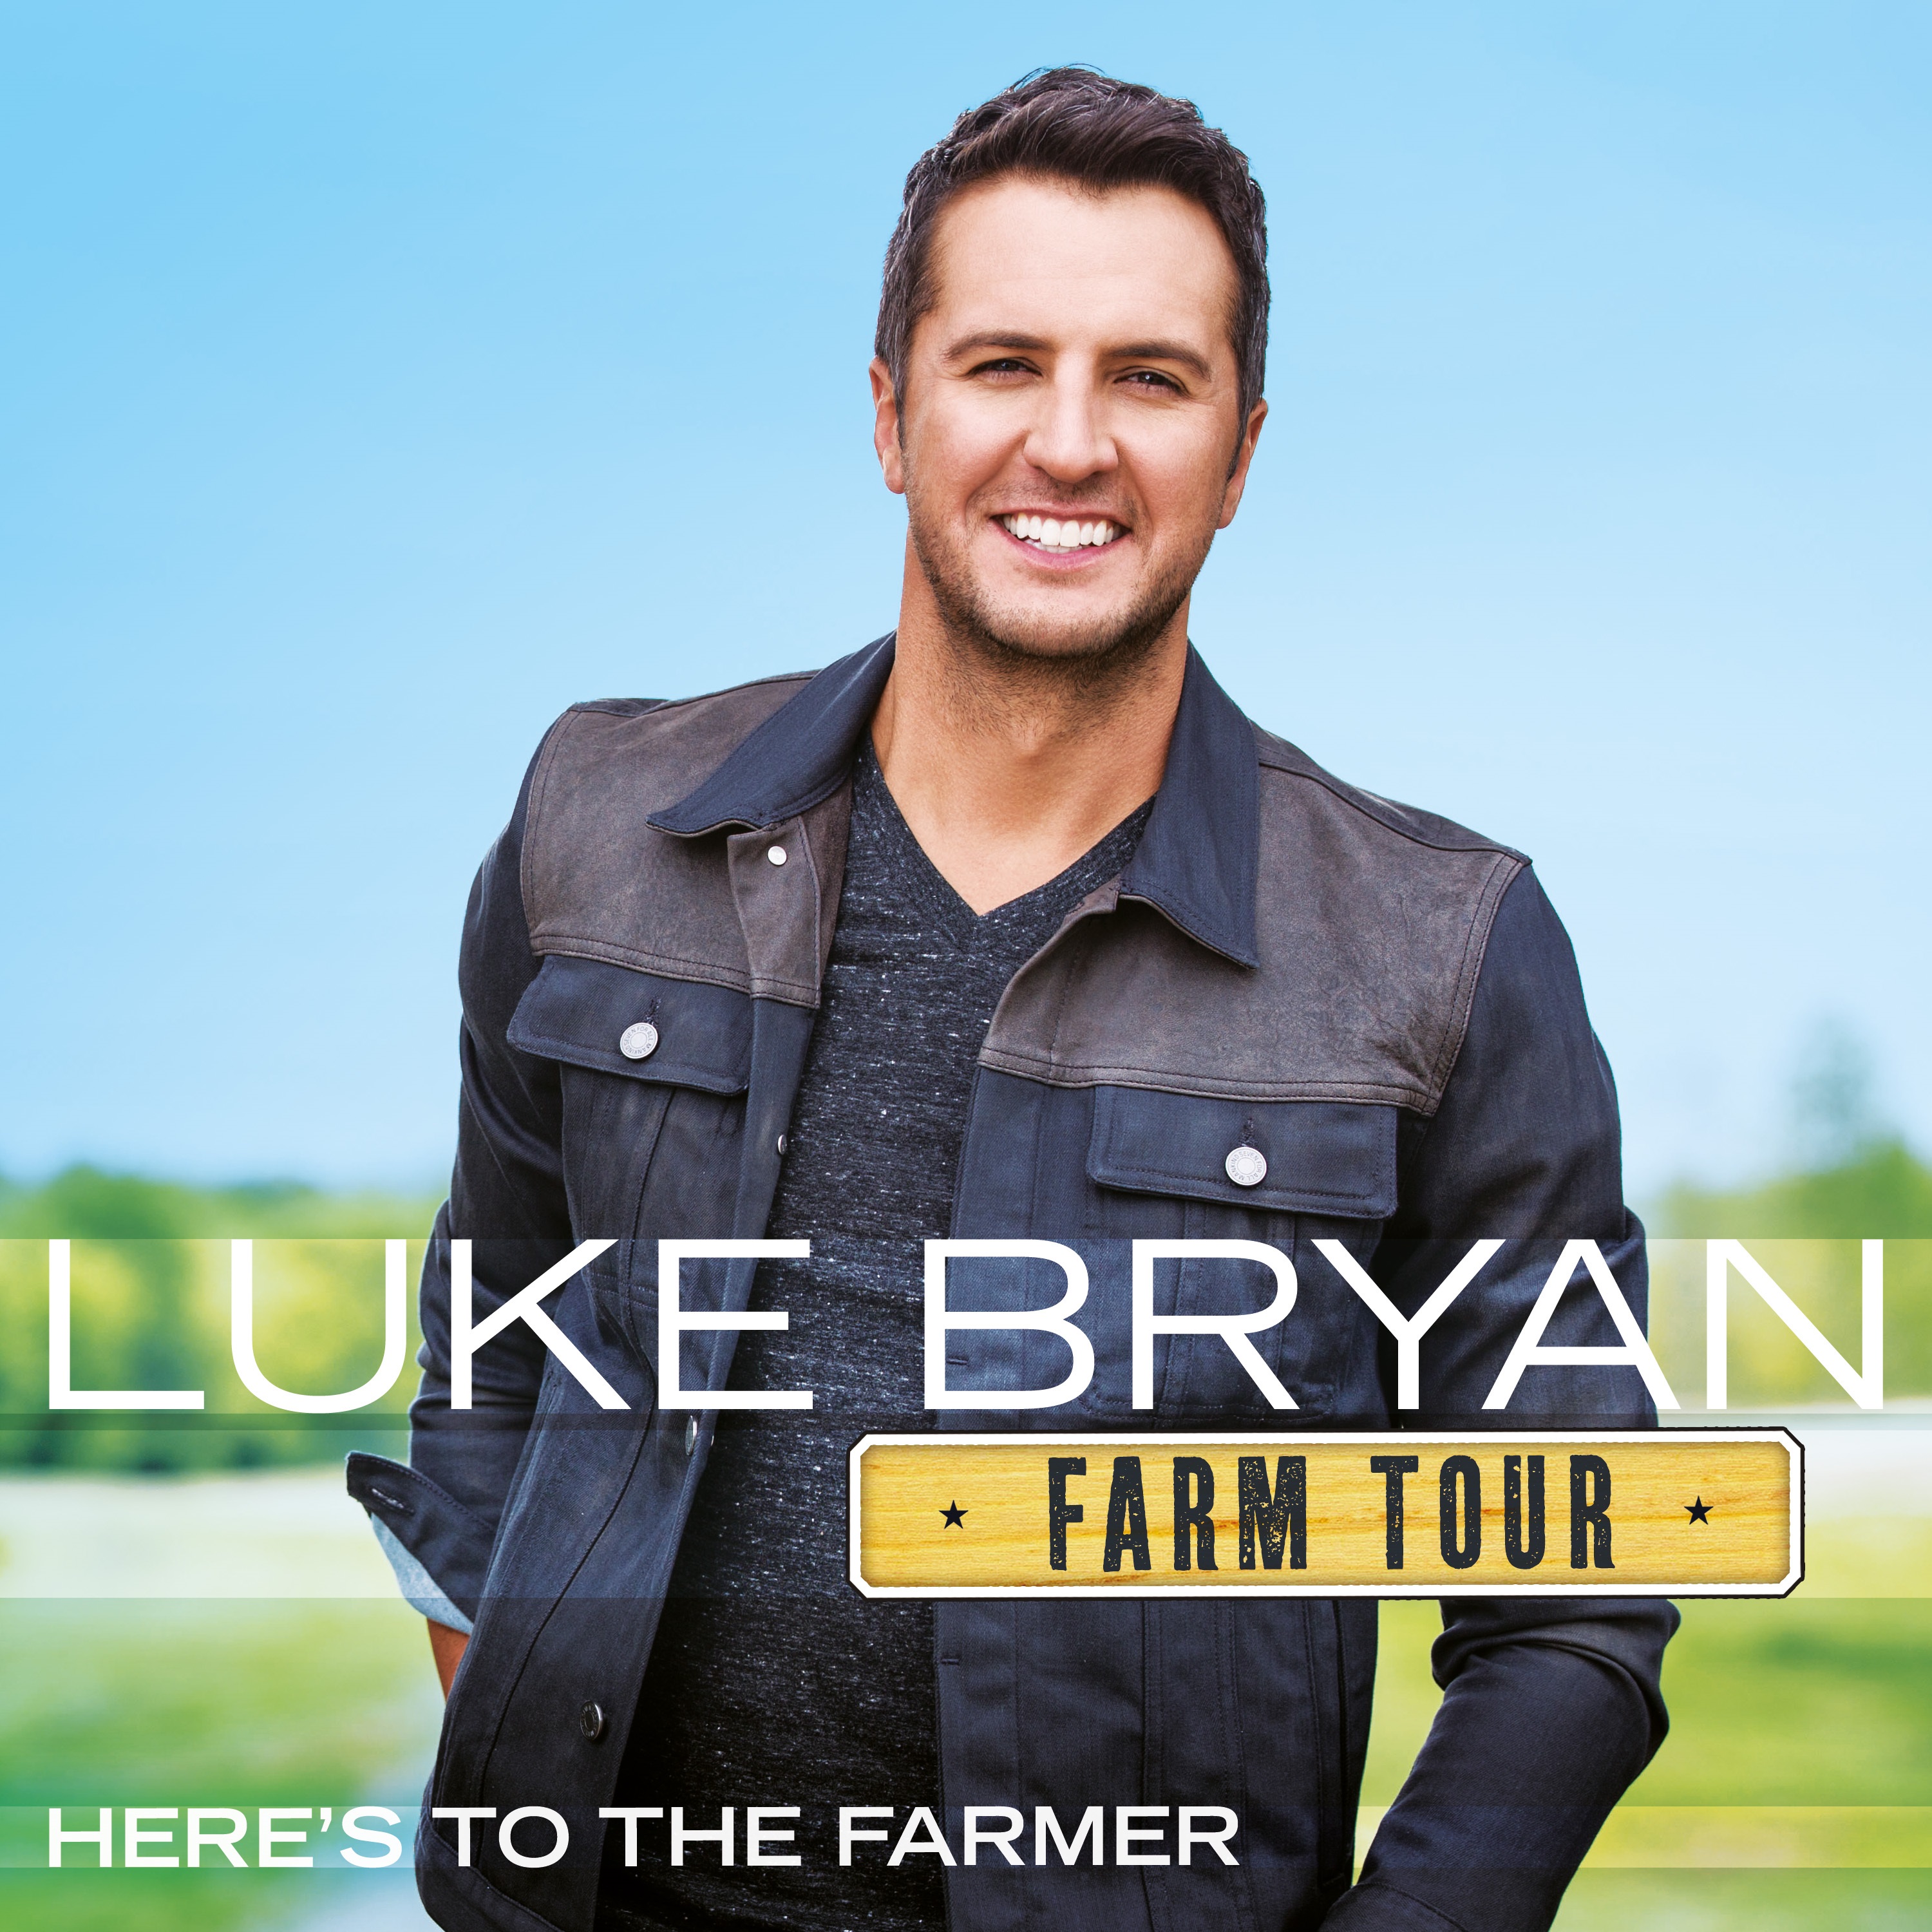 Luke Bryan Reveals Farm Tour...Here's To The Farmer Track Listing